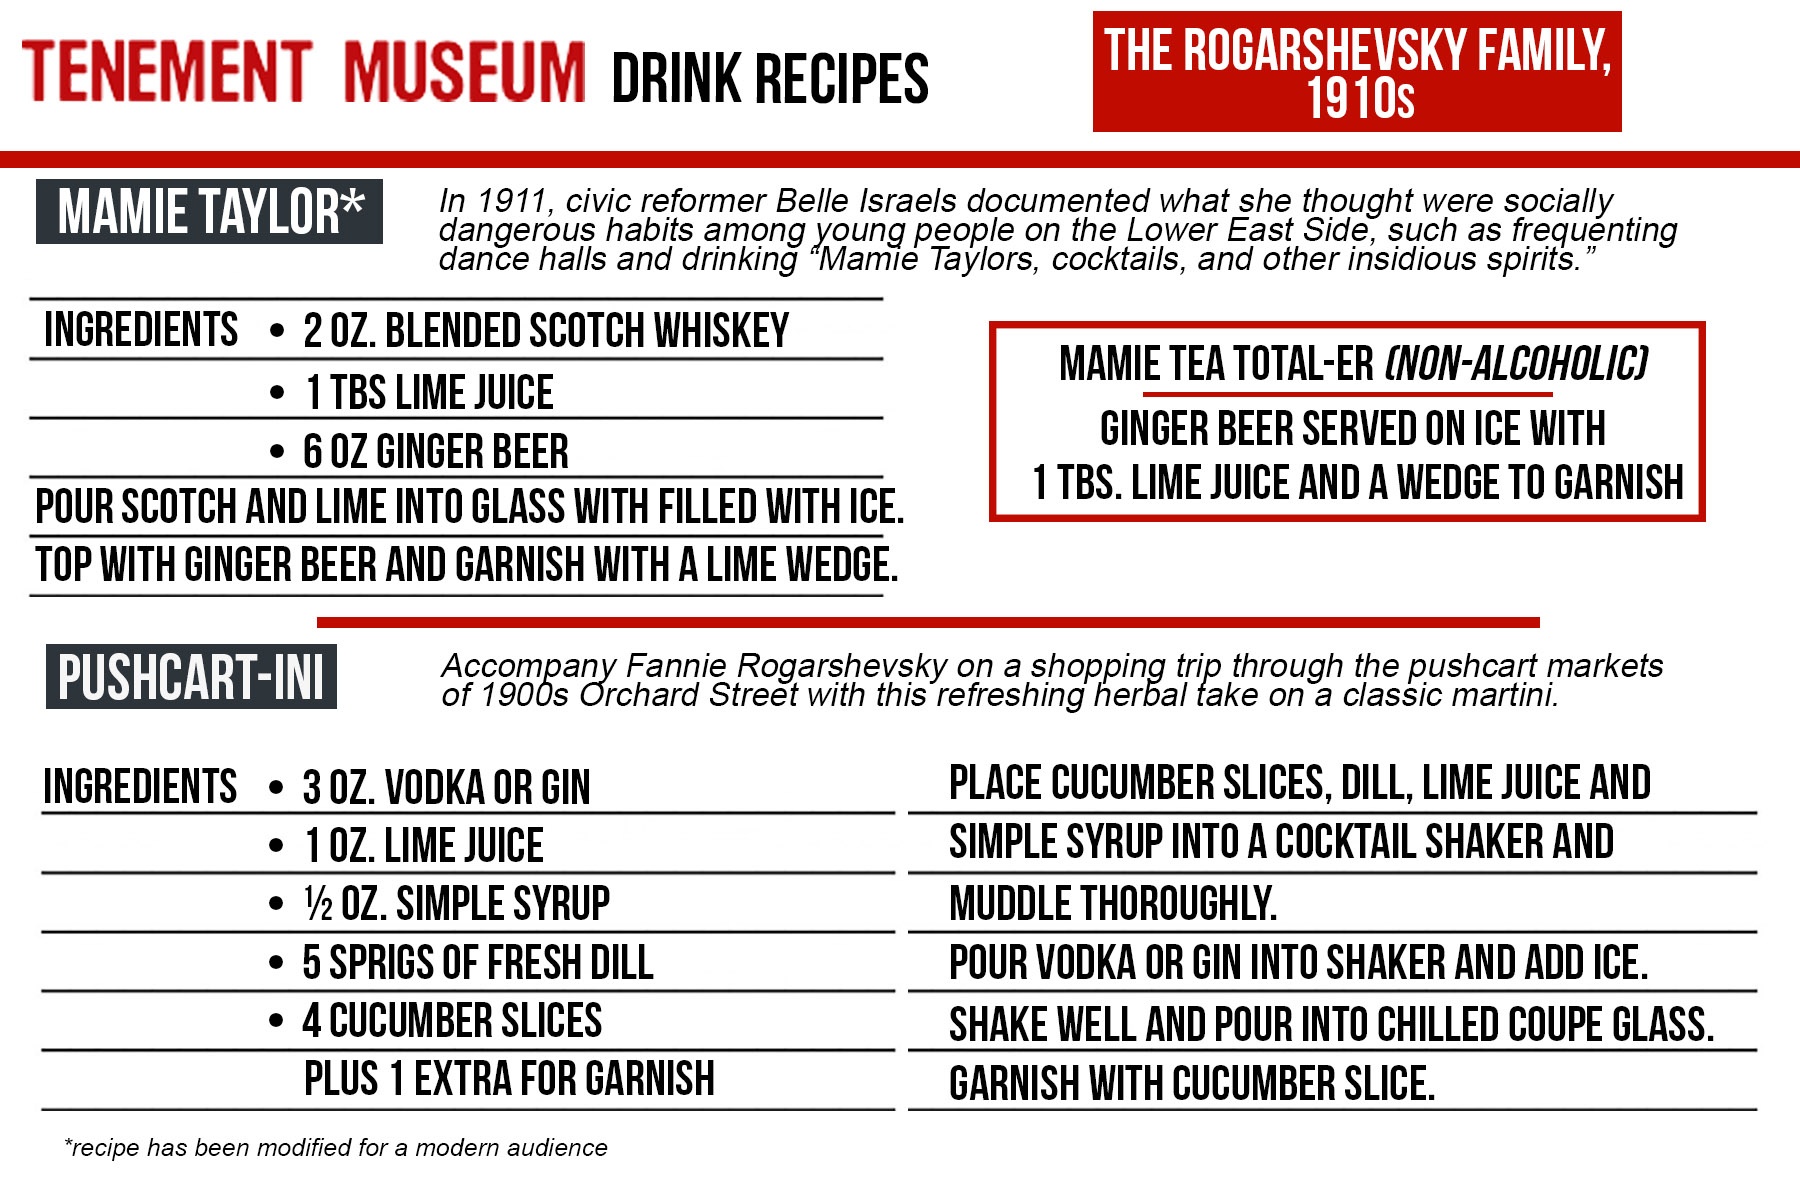 The Rogarshevsky Family 1910's Drink Recipe